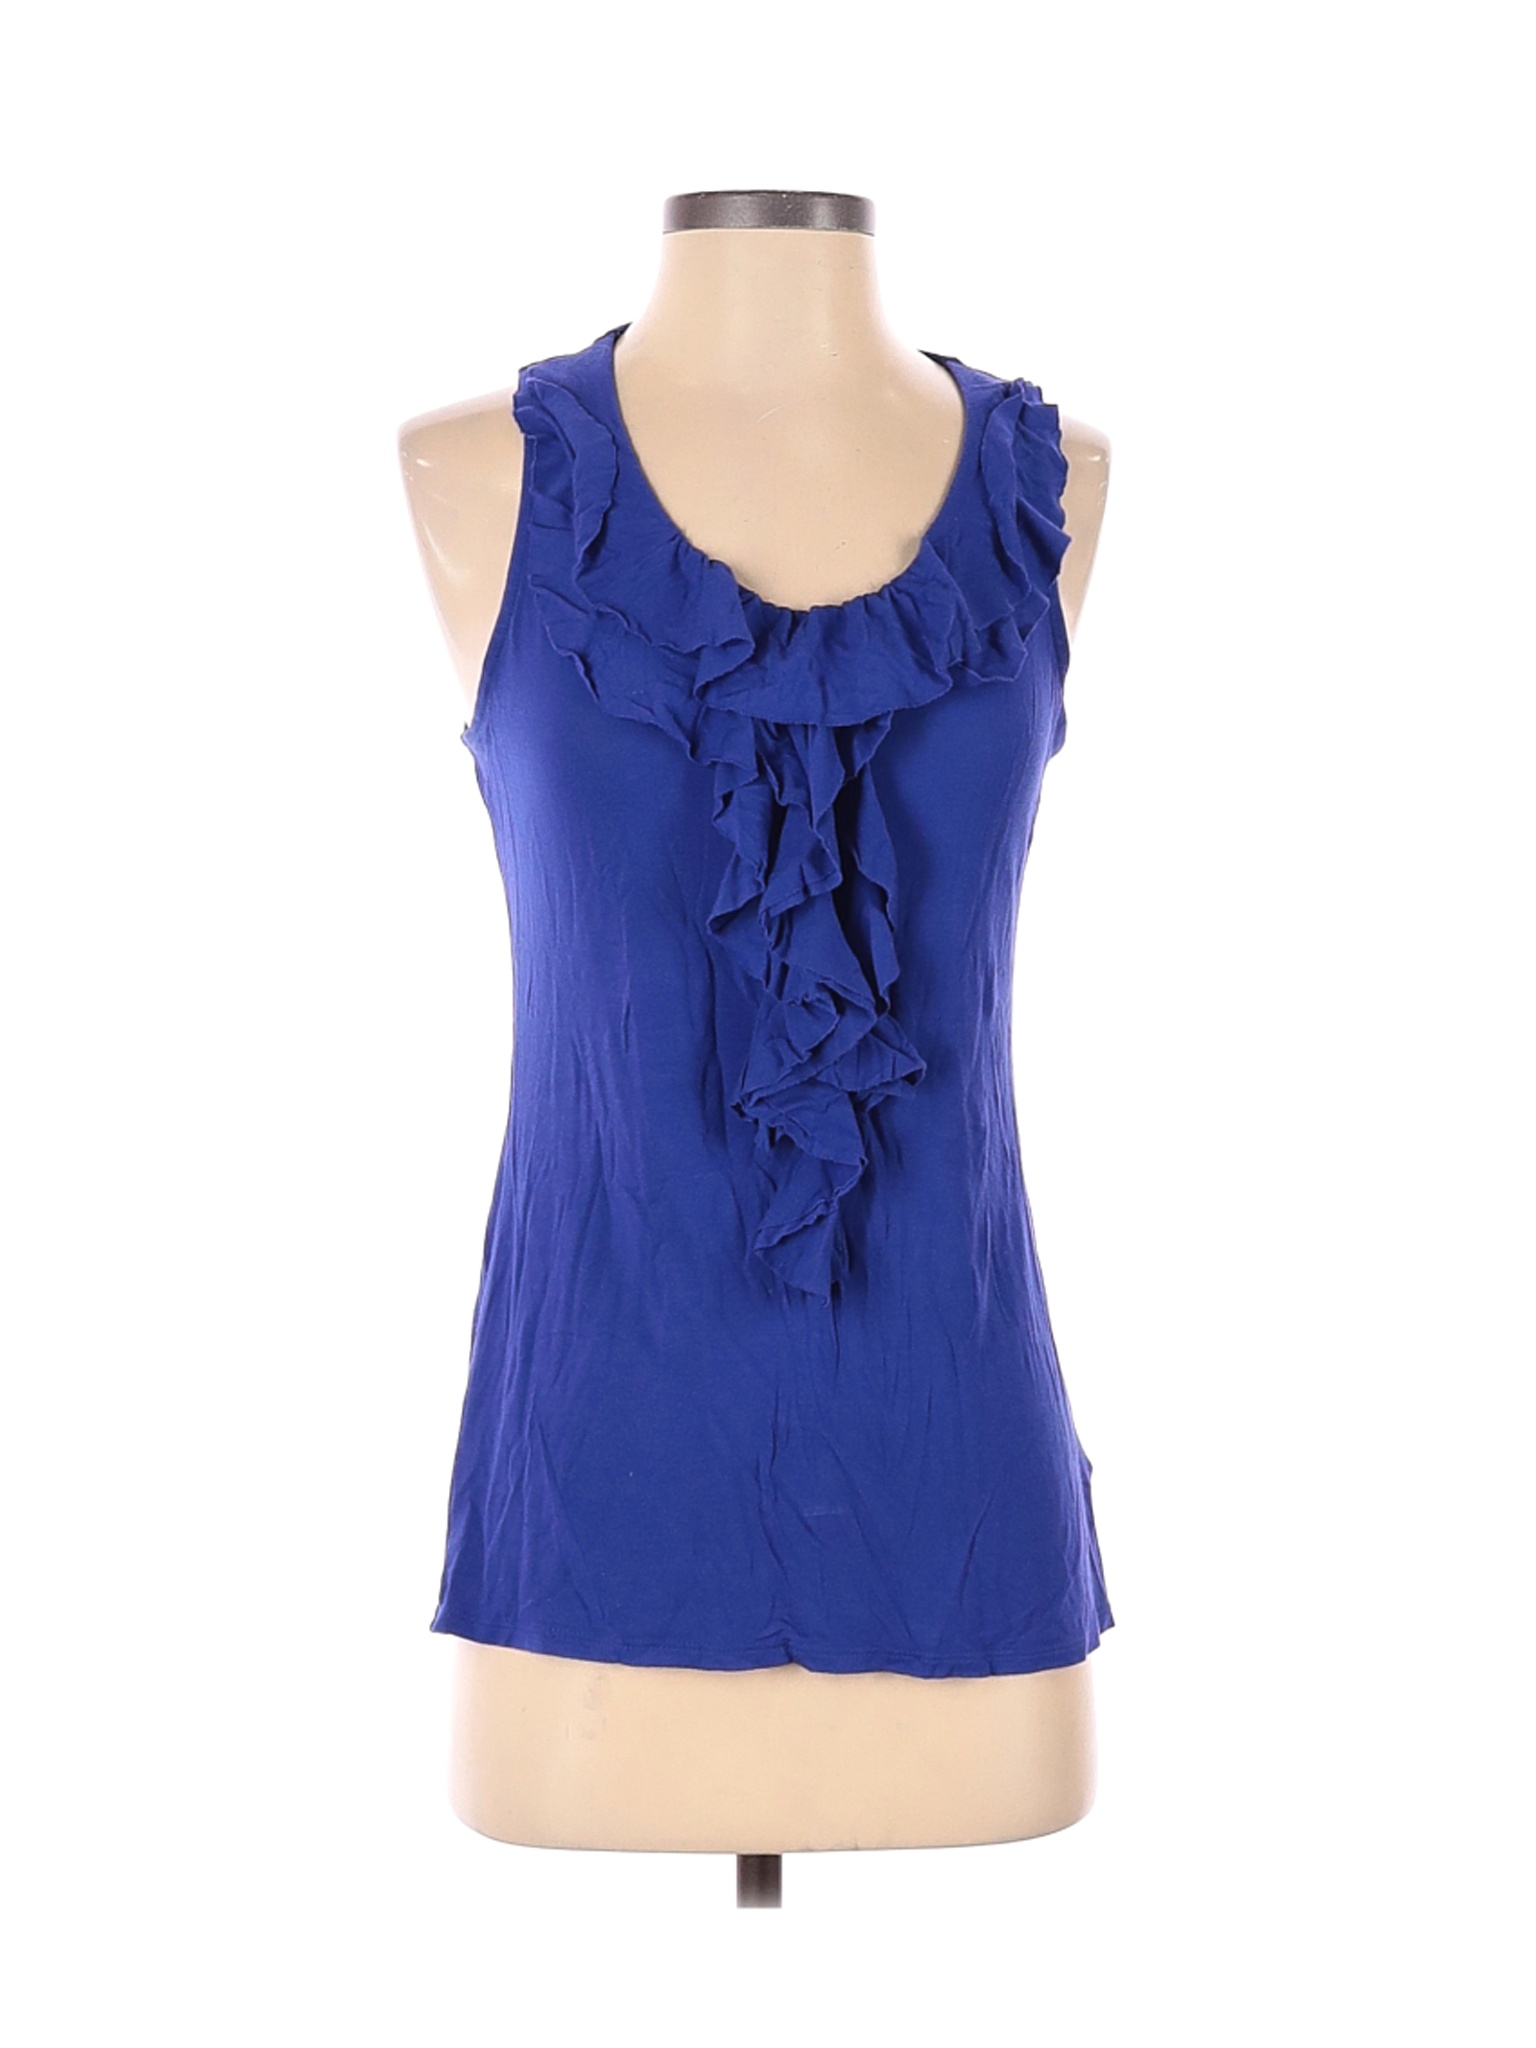 Merona Women Blue Sleeveless Top S | eBay